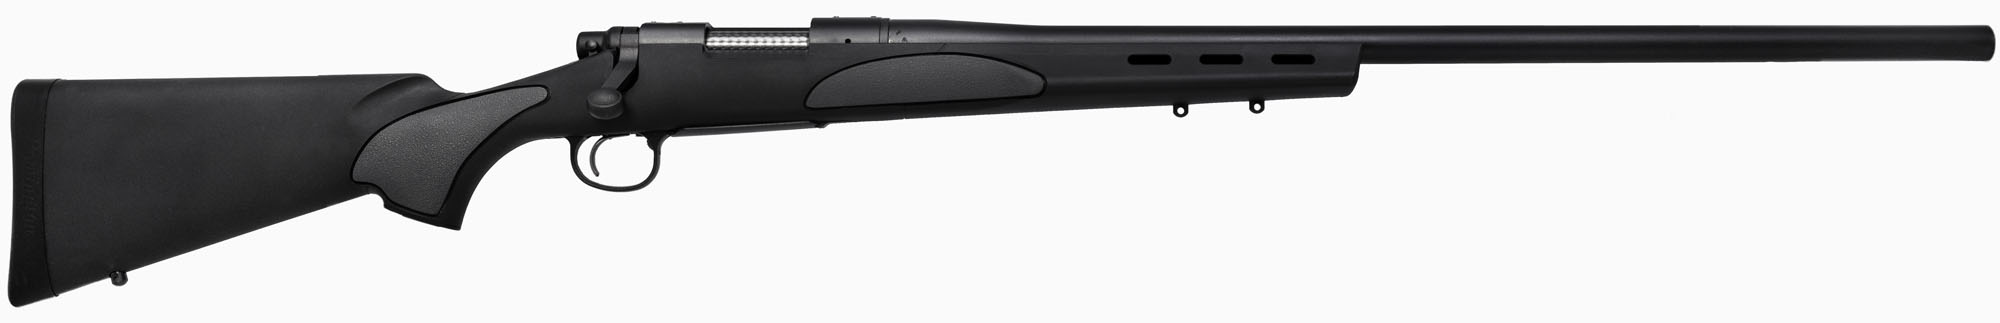 Rifle de cerrojo REMINGTON 700 SPS Varmint - 308 Win.